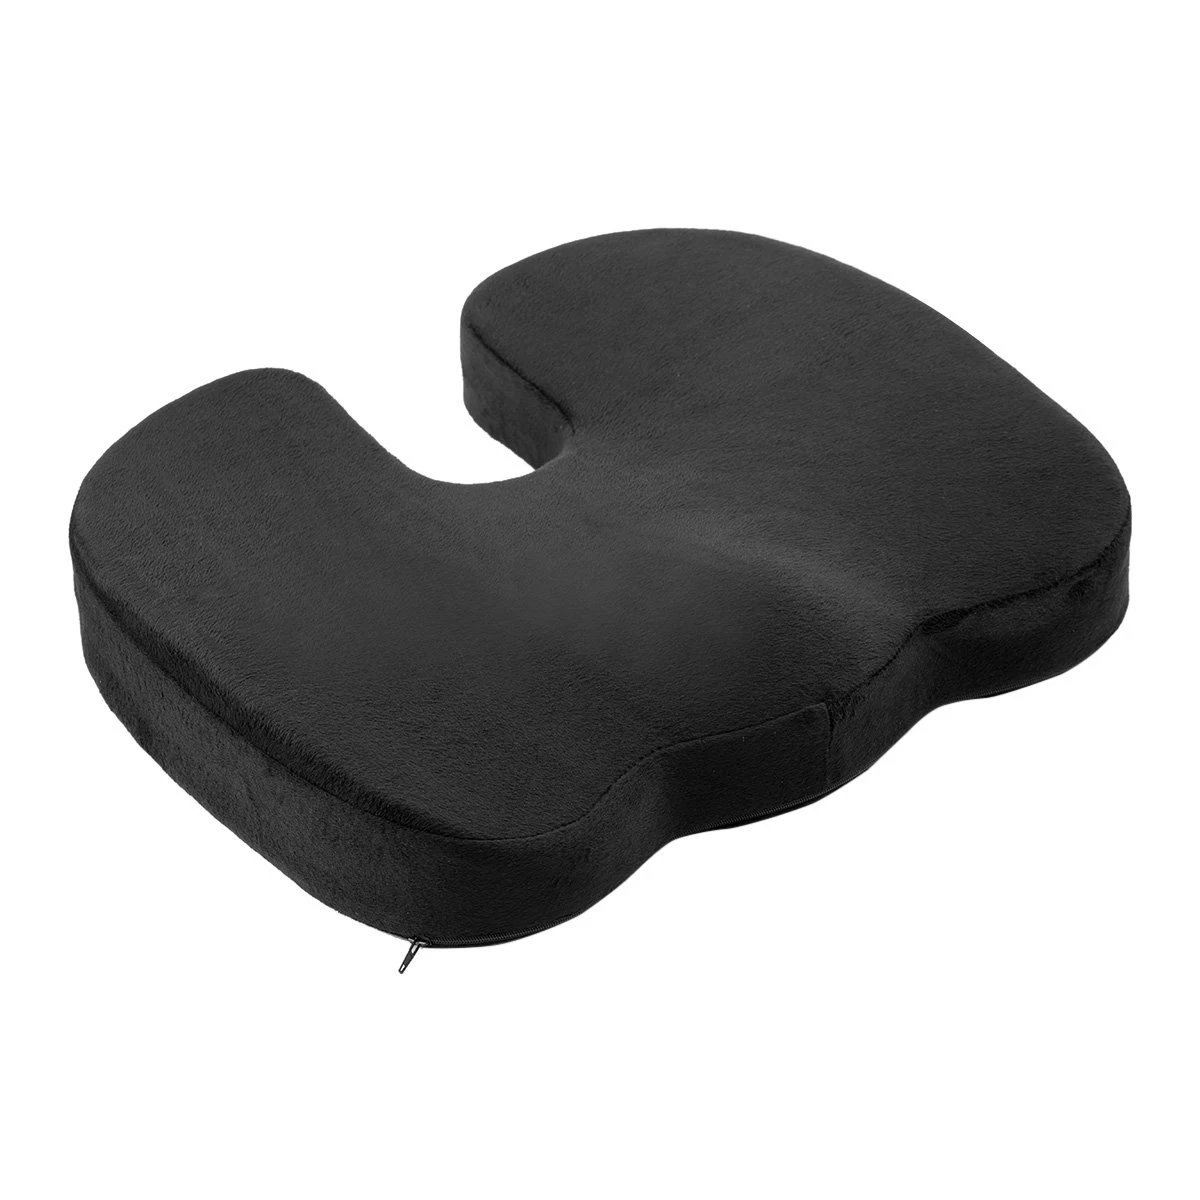 comfort seat cushion,PU chair memory foam seat cushion